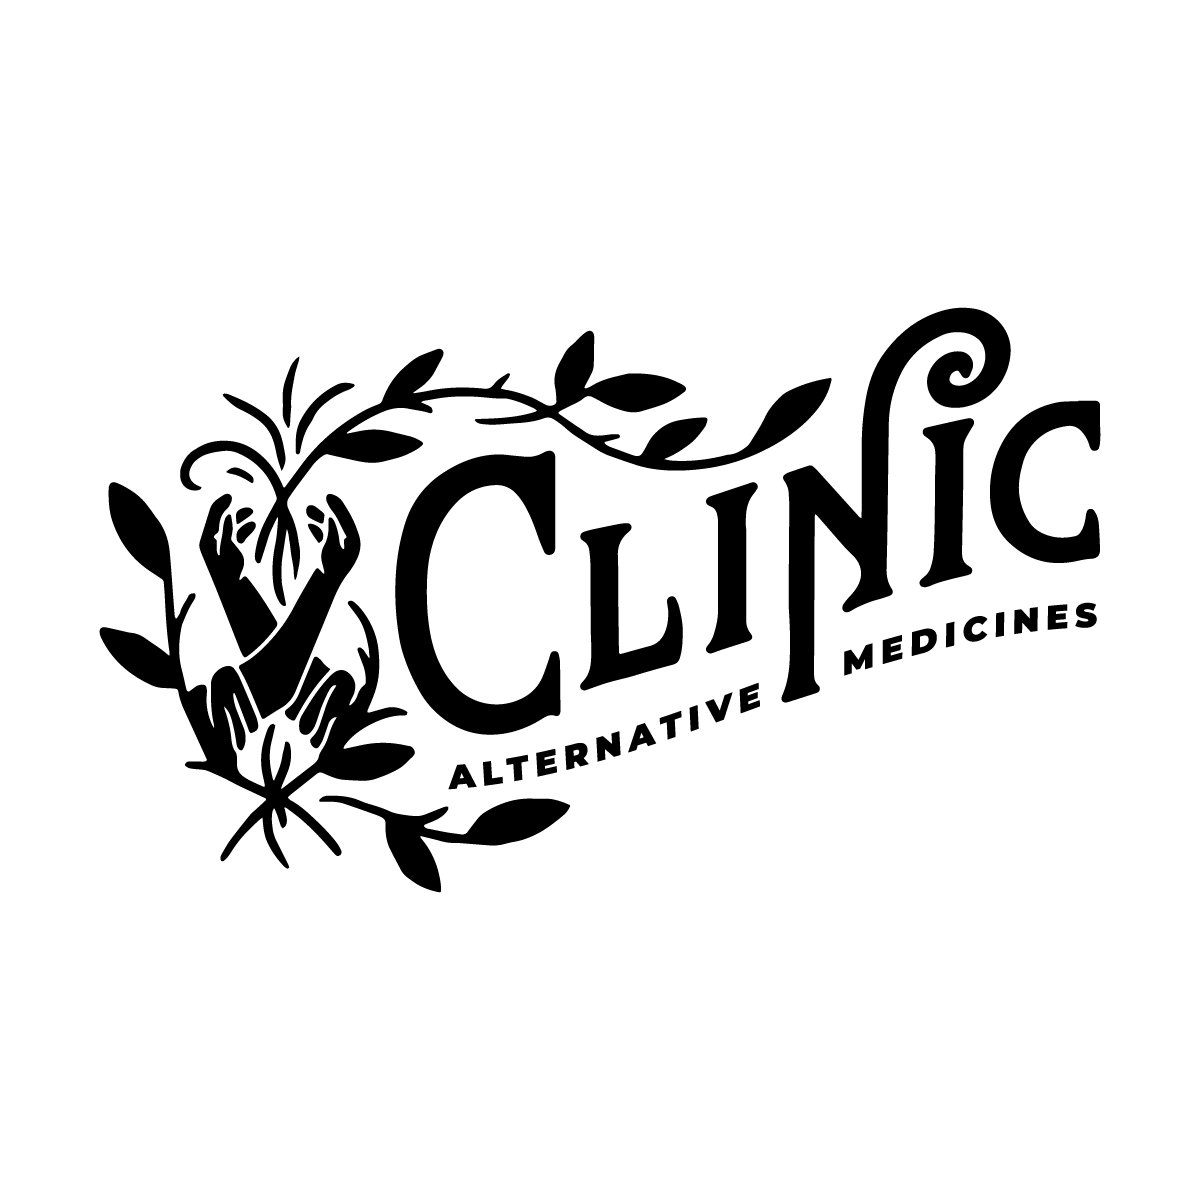 CLINIC Alternative Medicines